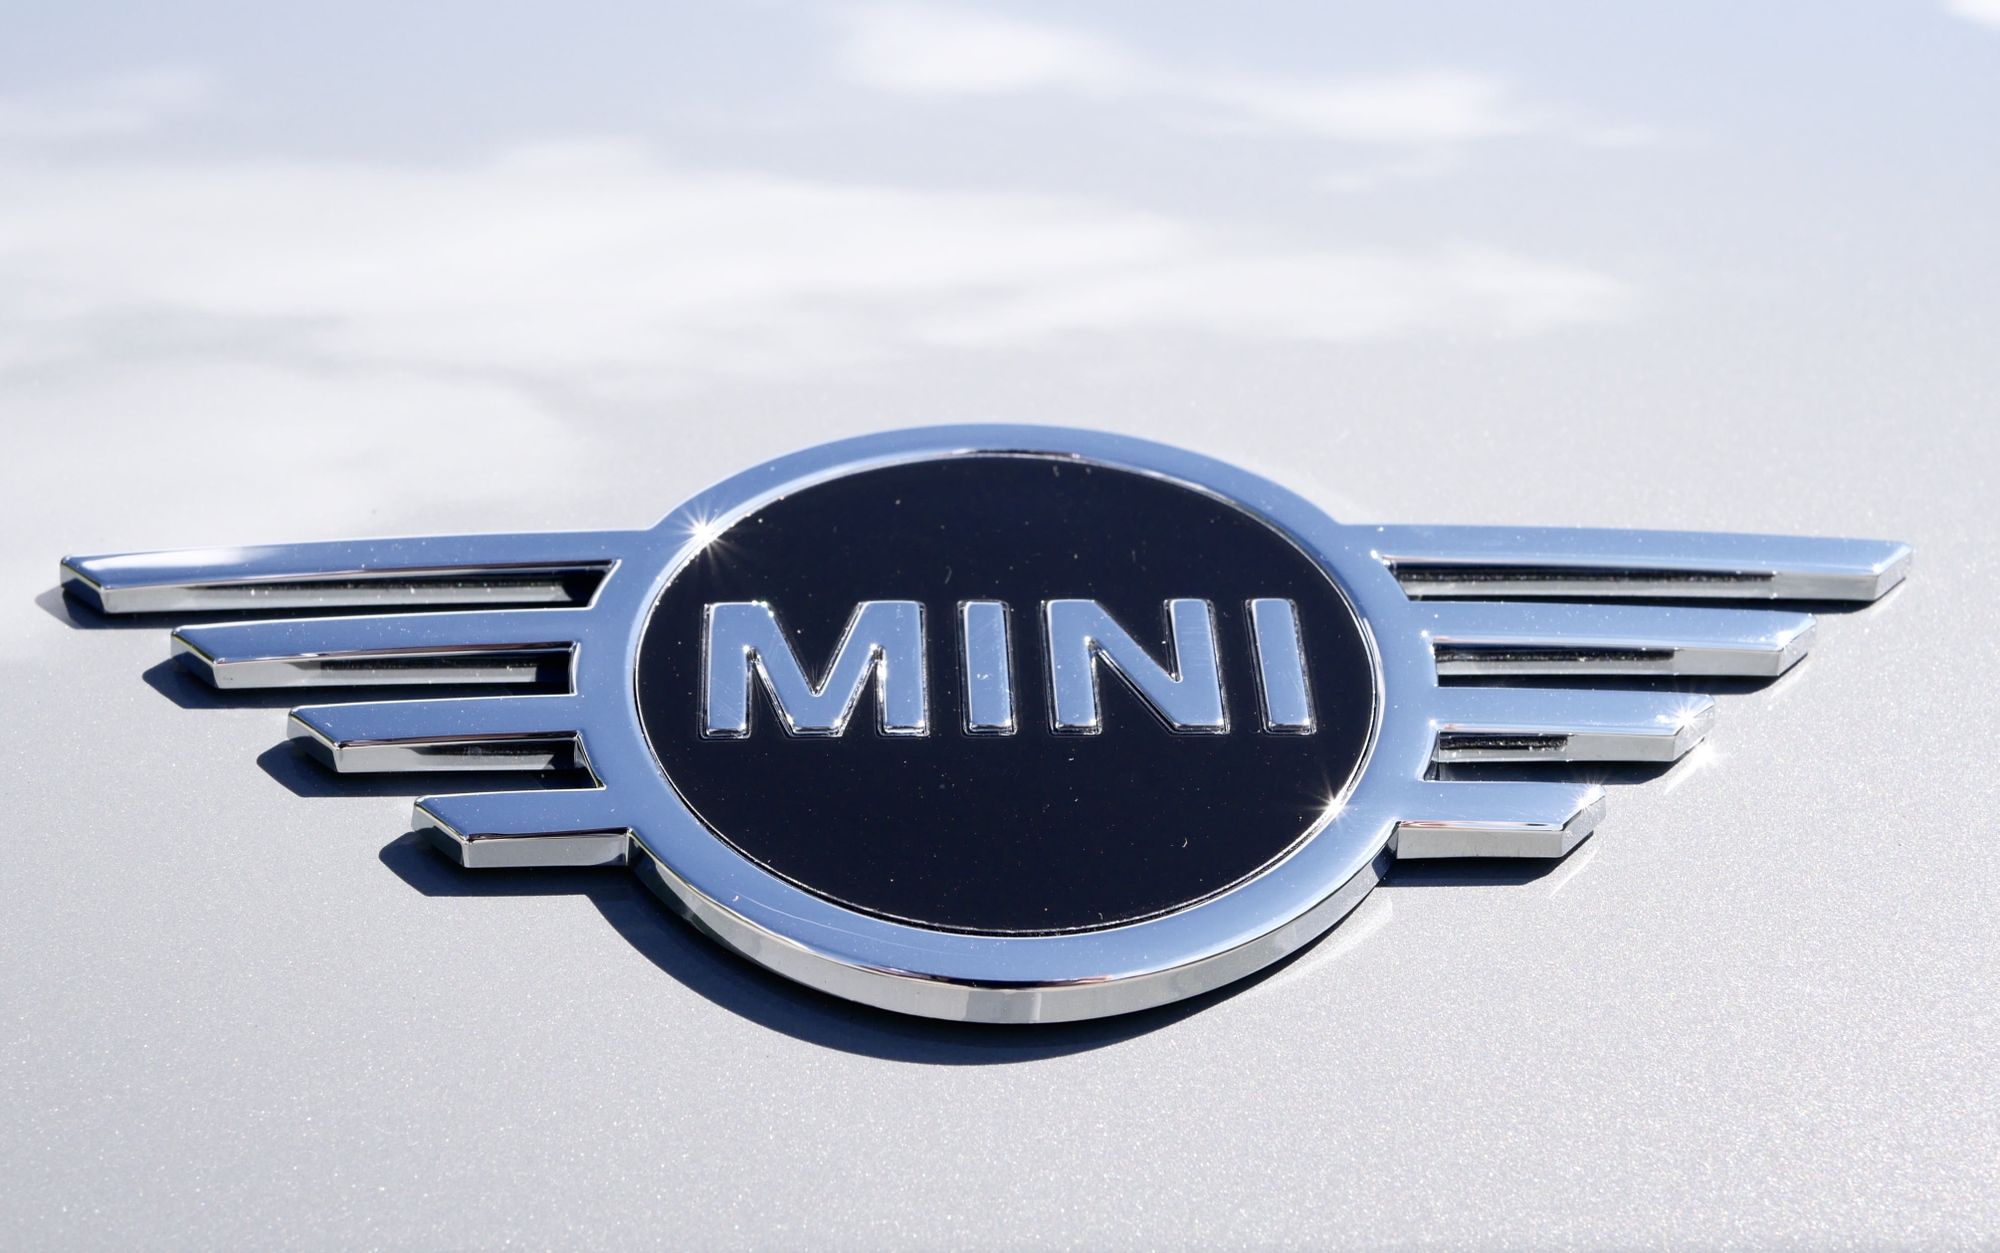 Das neue MINI Logo auf der Motorhaube